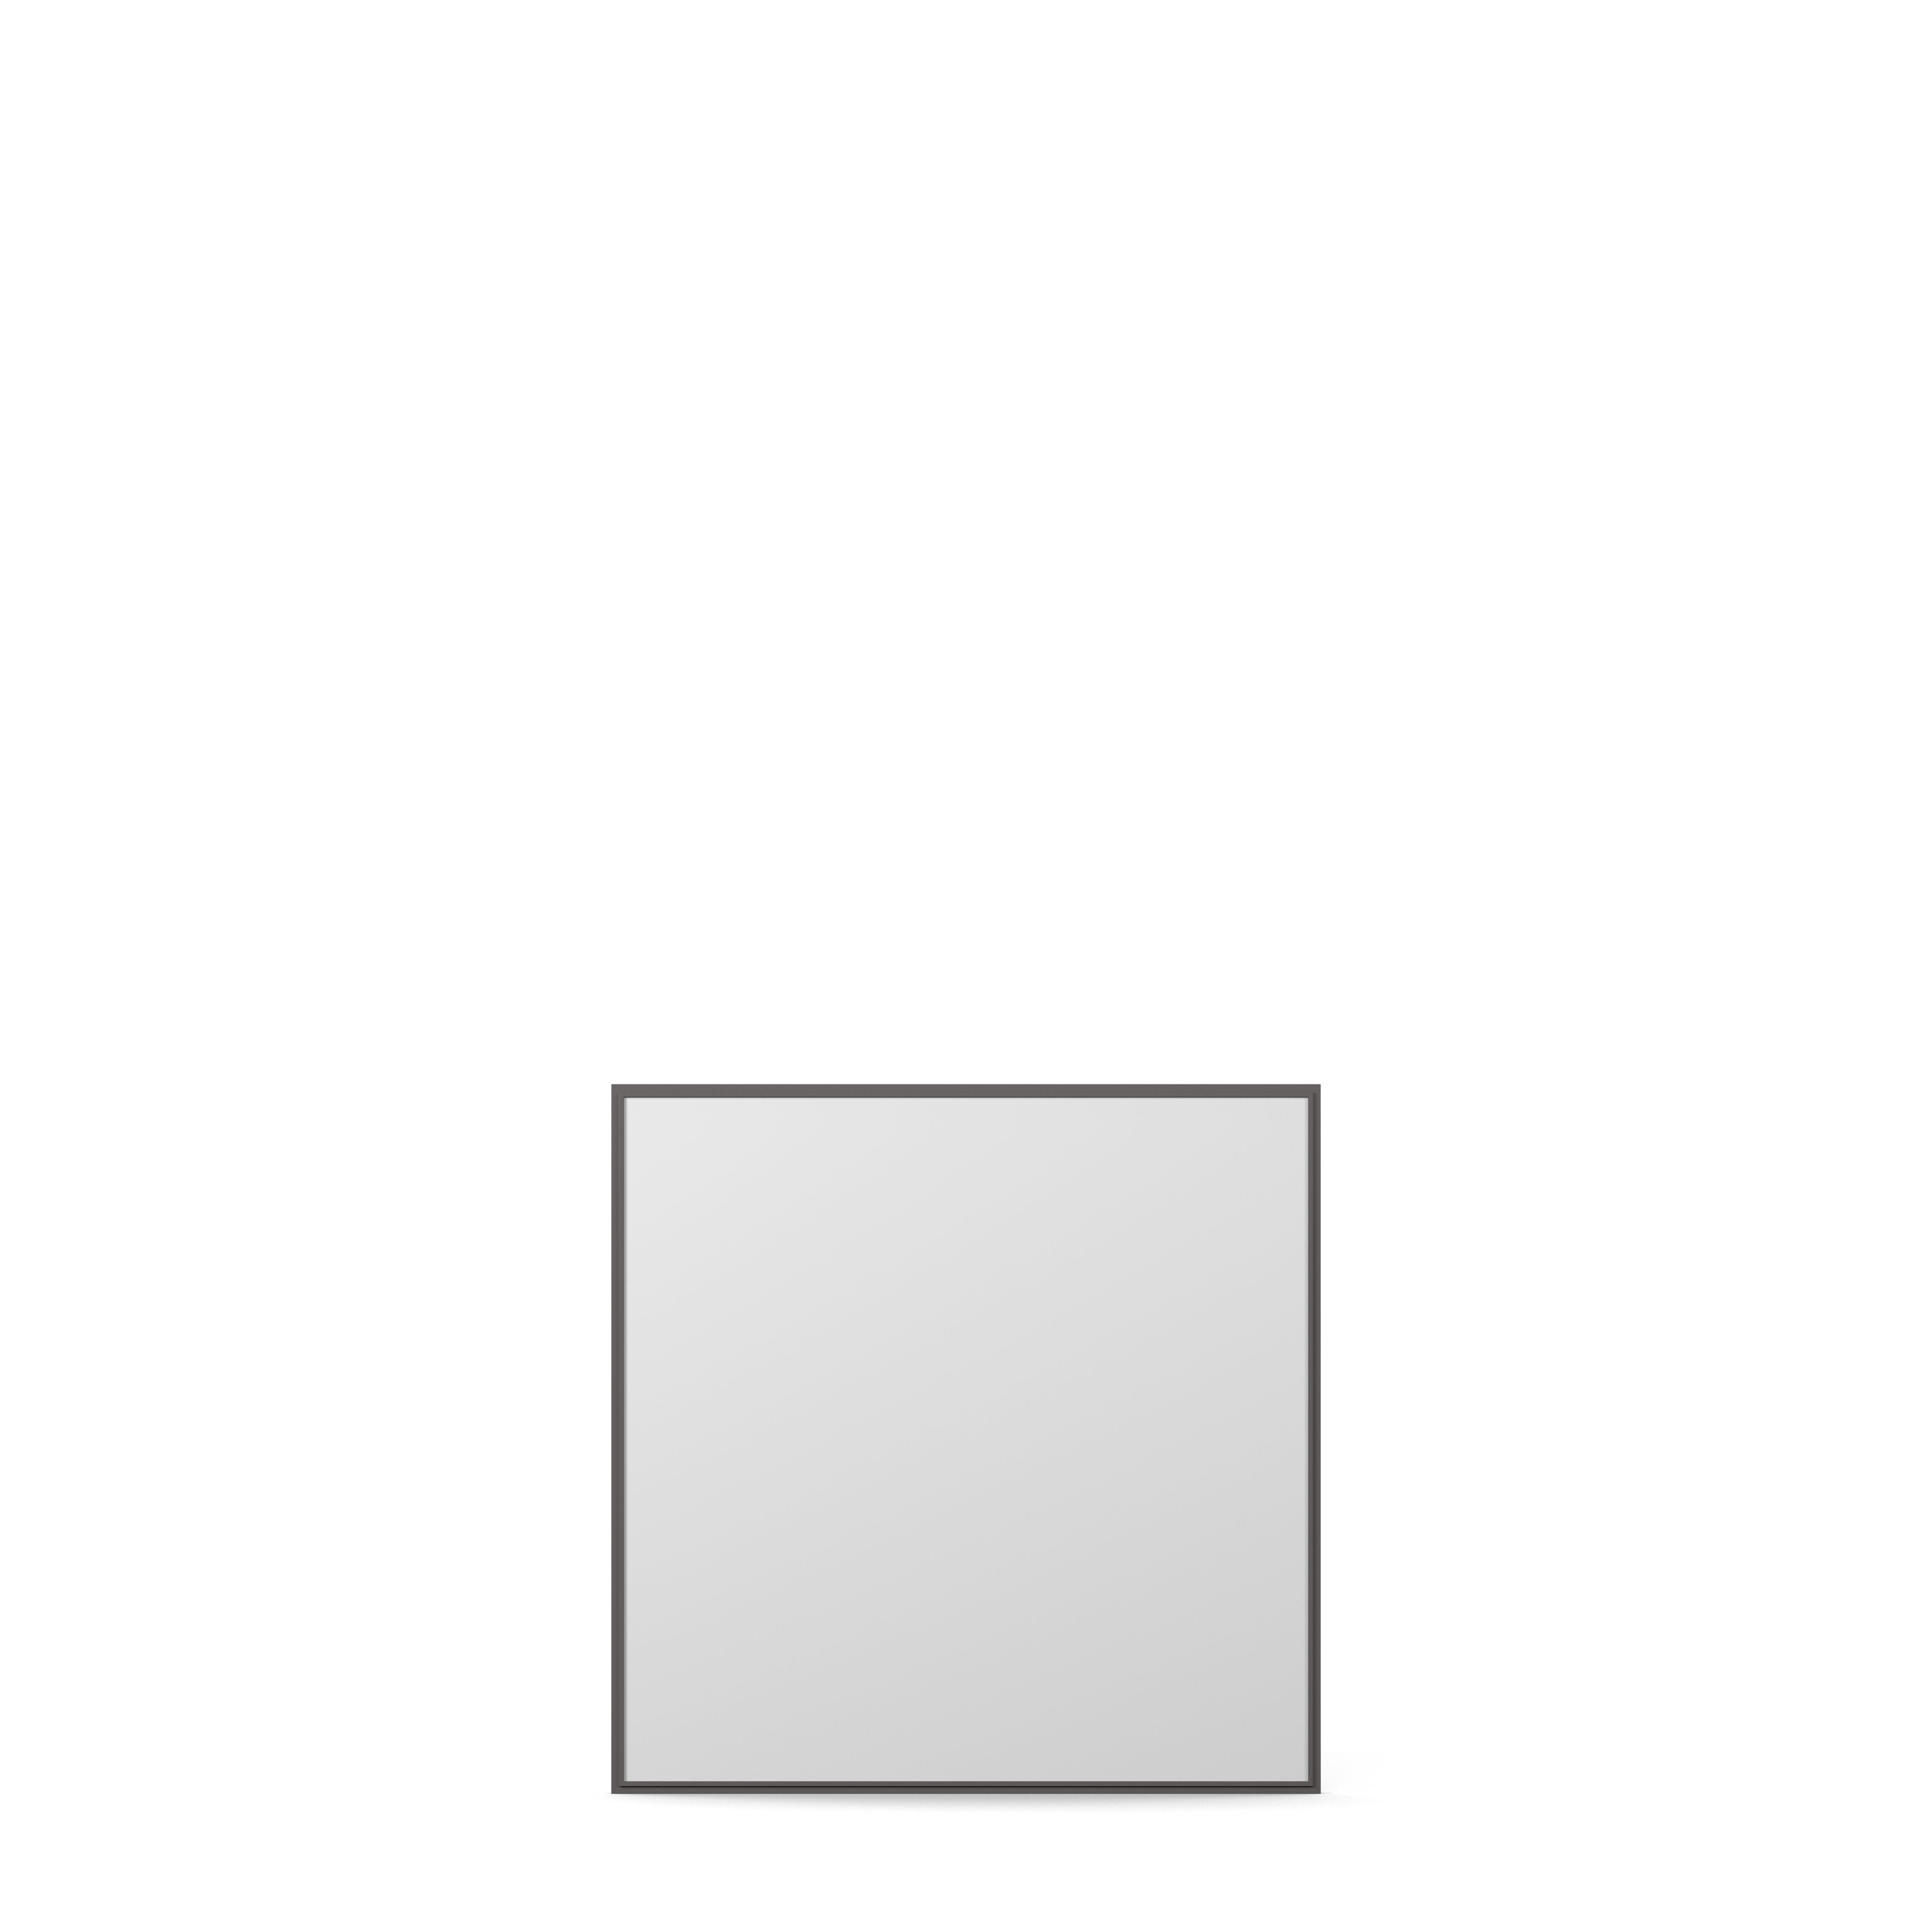 Englesson Speglar Edge Grey Cube Spegel Kvadratisk 830EG #färg_Edge Grey #Colour_Edge Grey